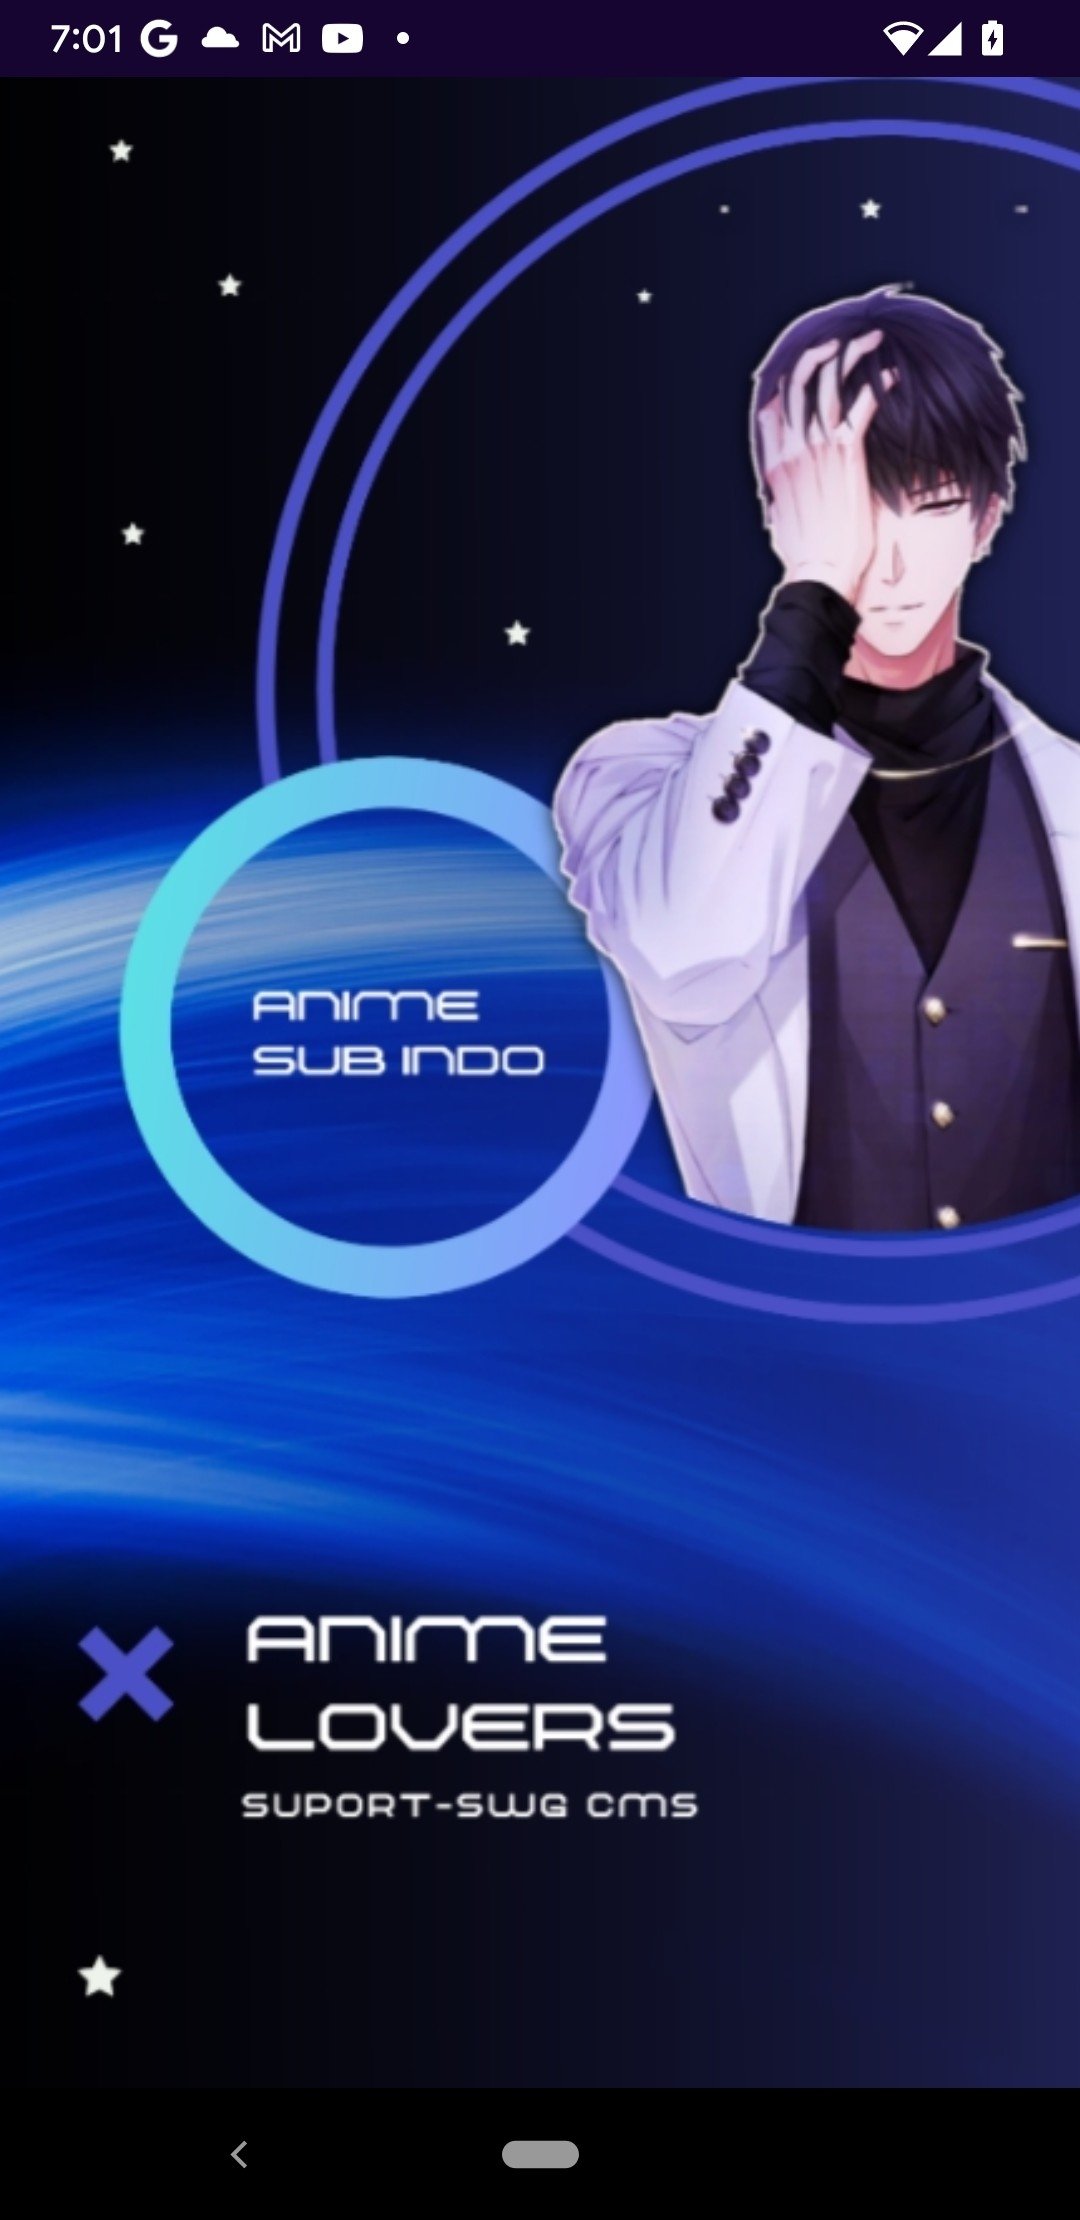 Appnime - Ver Anime Online Gratis APK (Android App) - Free Download